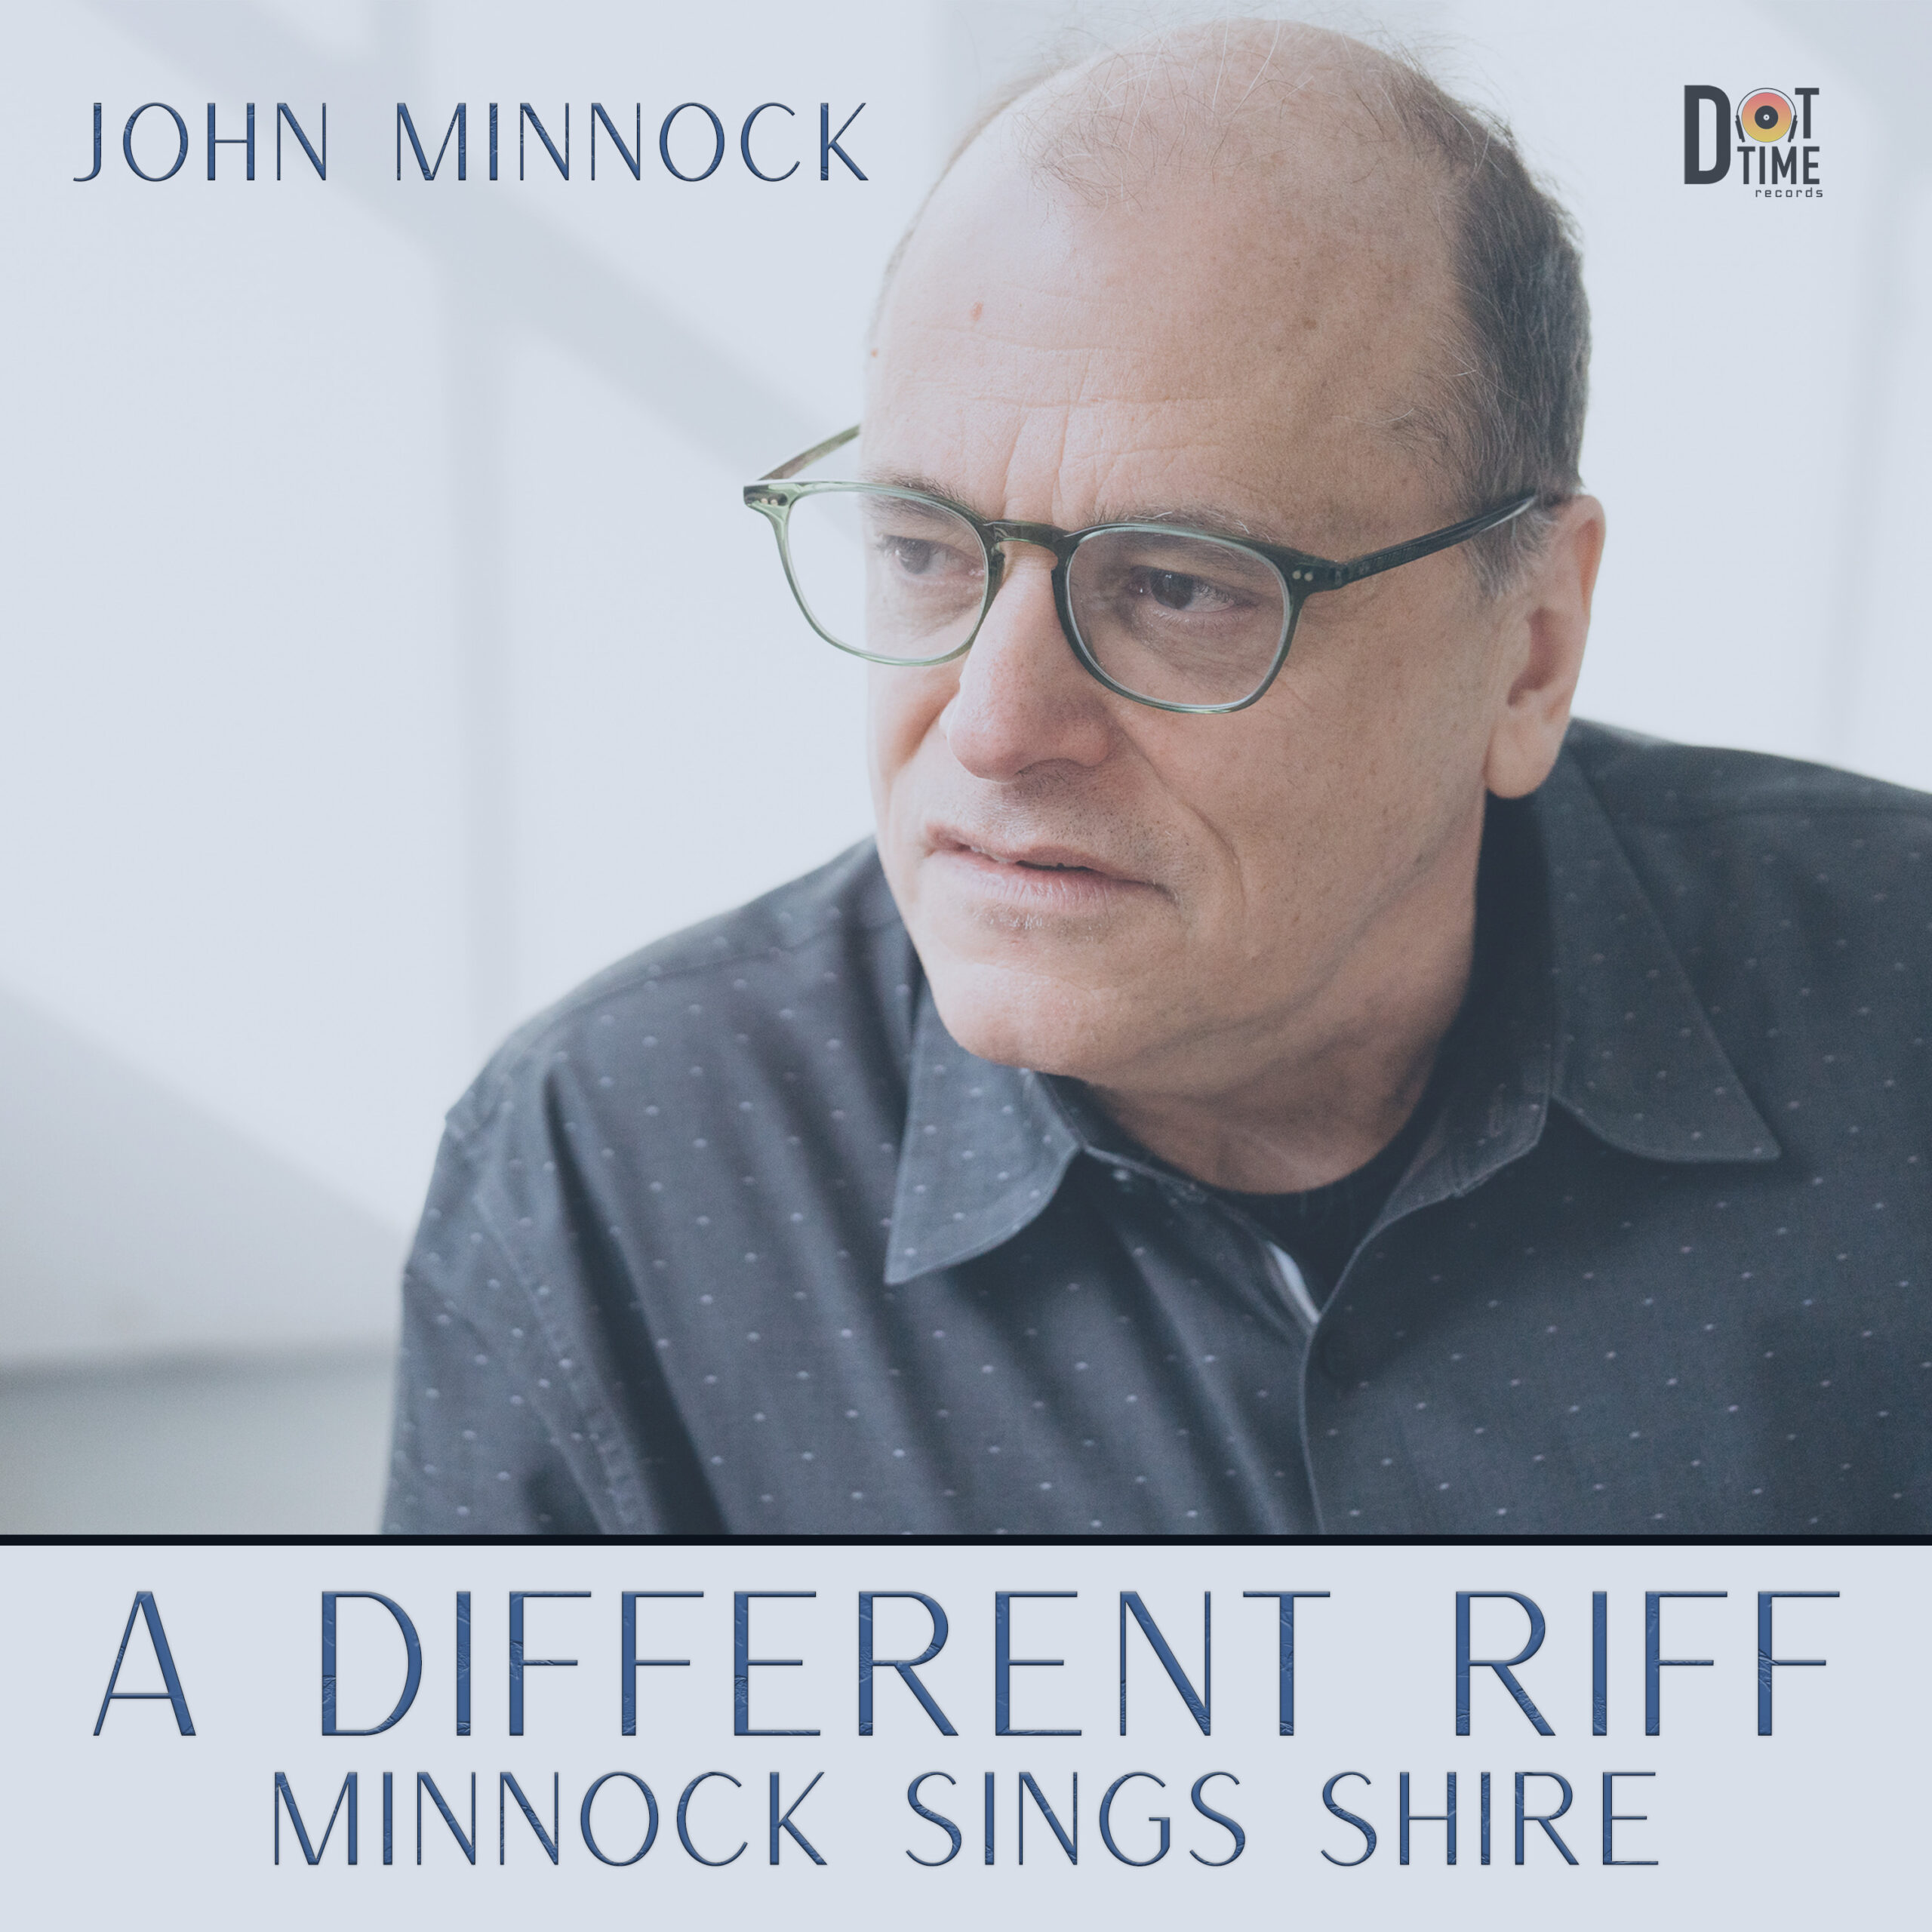 John Minnock - A Different Riff Cover 3000x3000